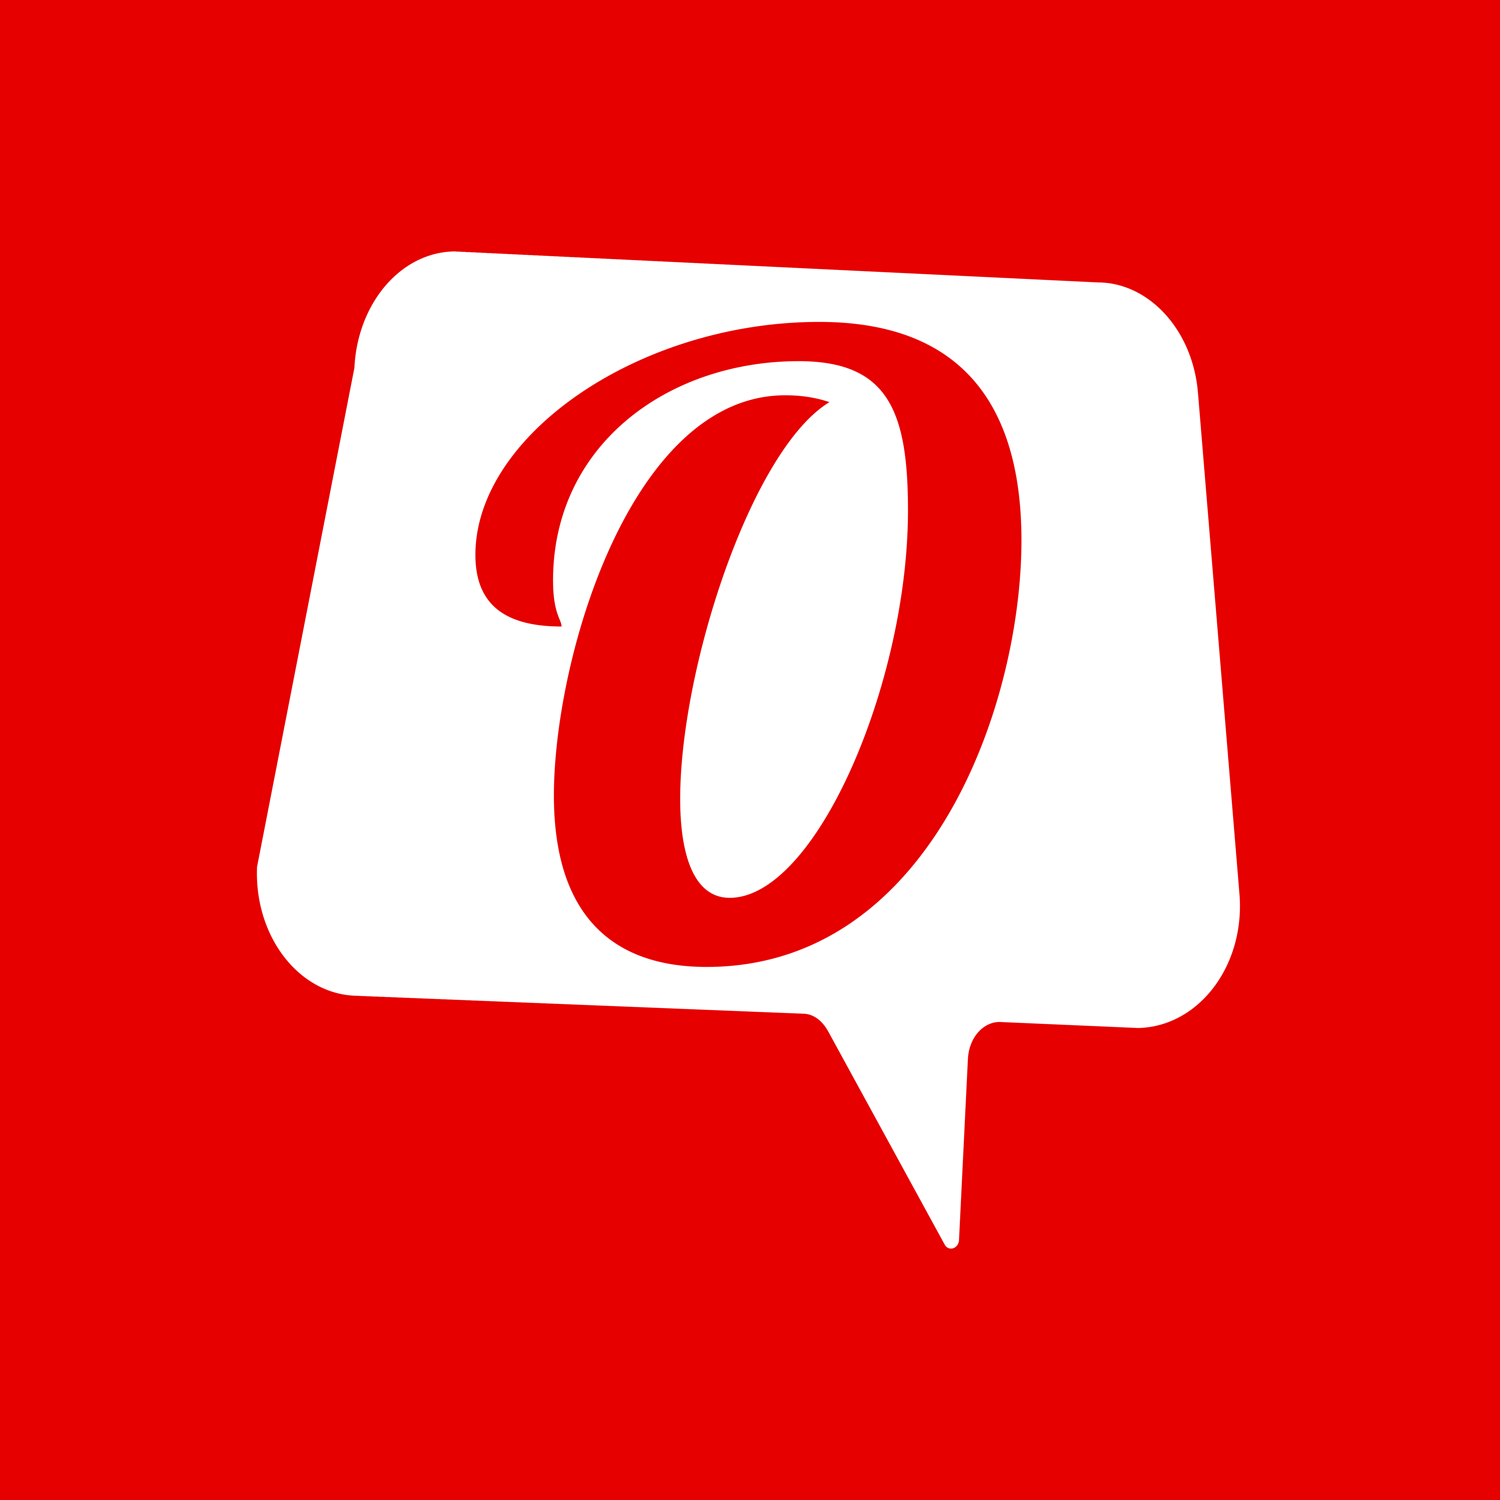 Onolingo logo with red frame